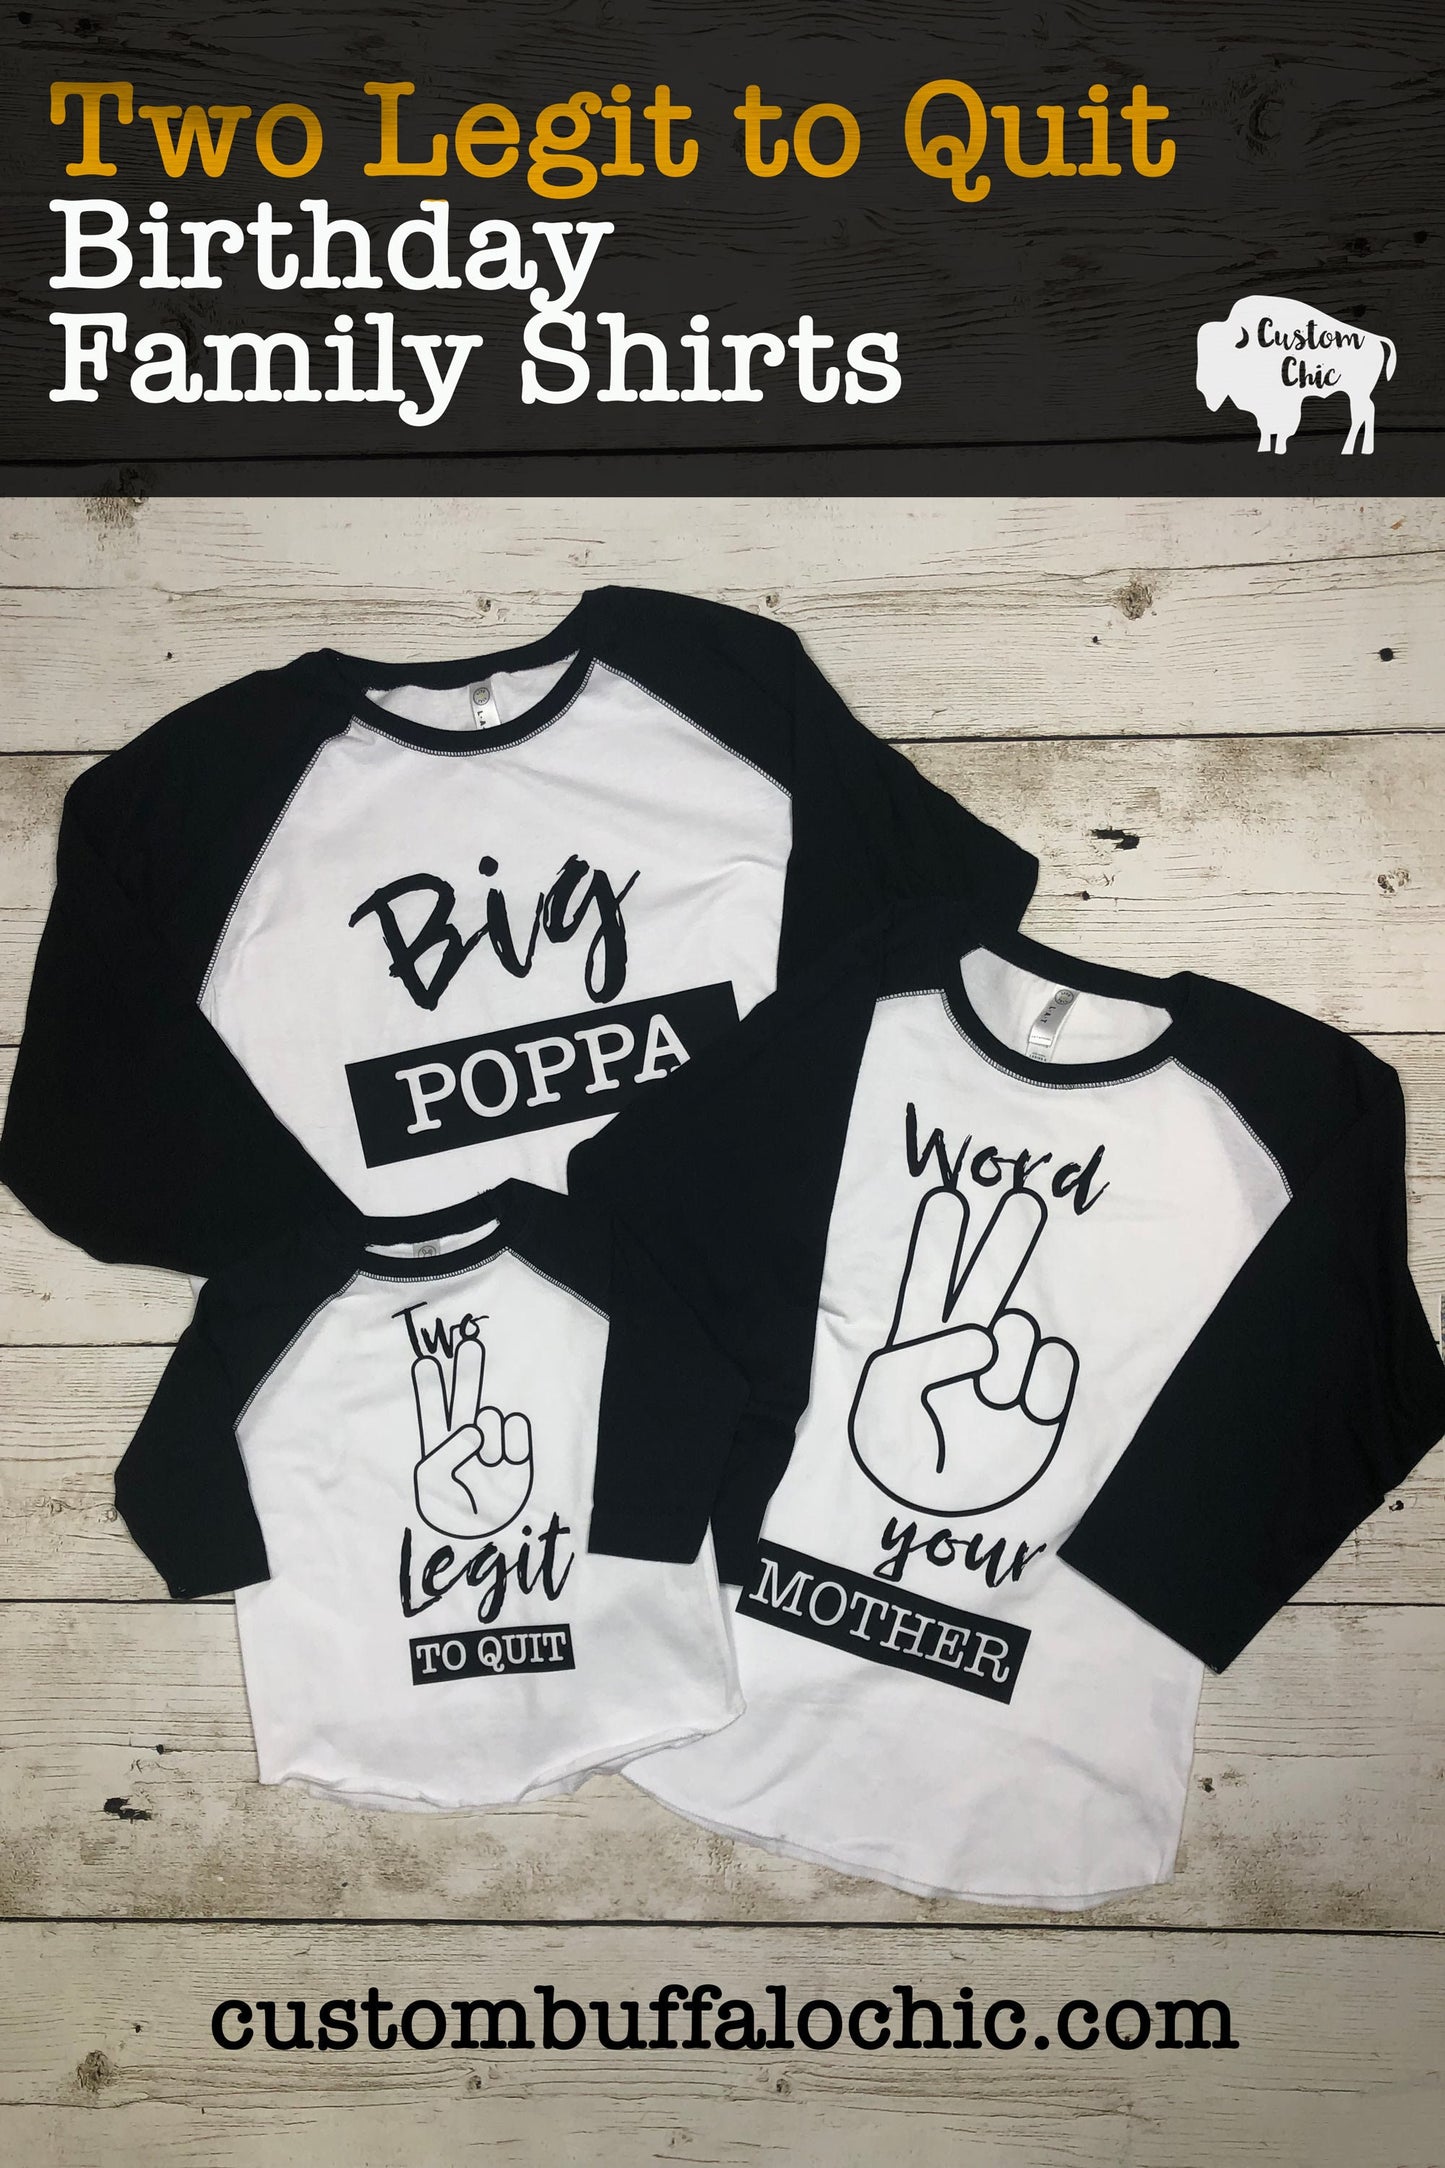 Two Legit to Quit Family shirts | Word 2 your Mama Baseball Tee | Big Poppa Shirt